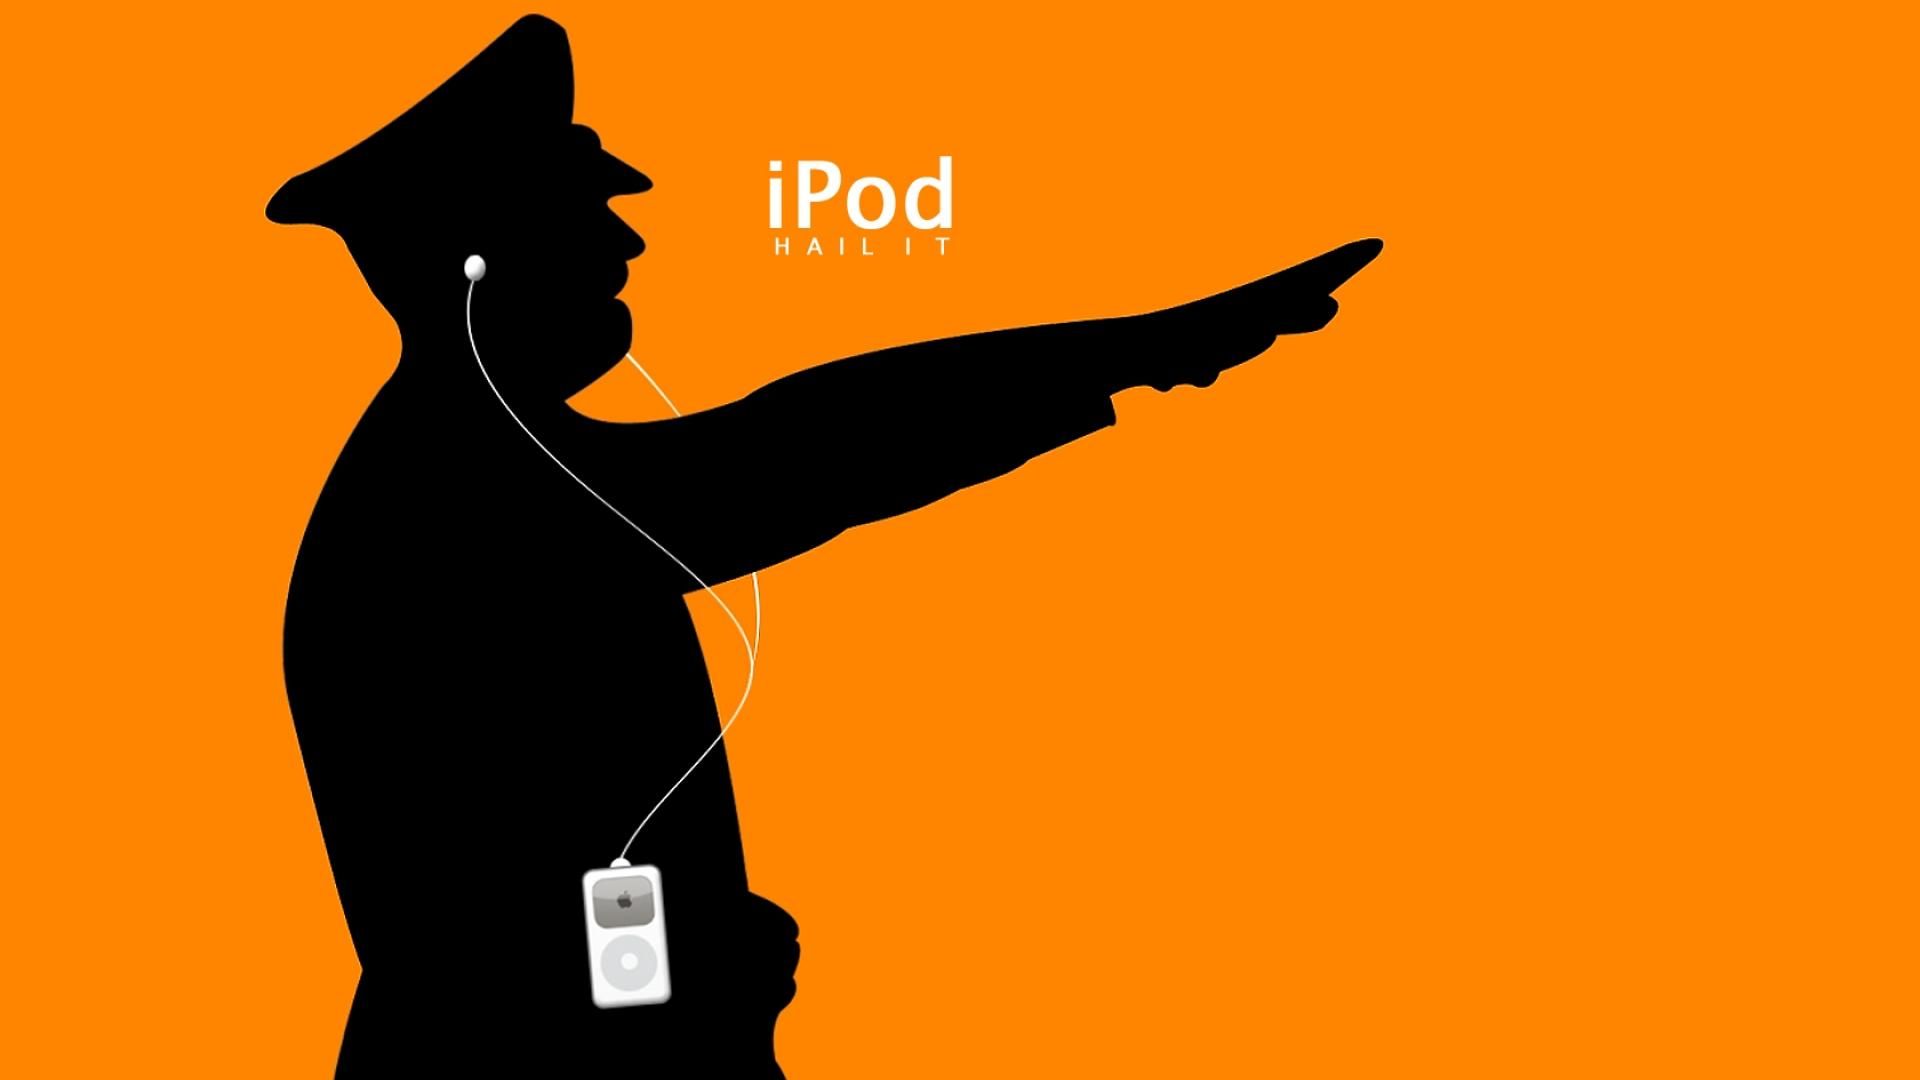 Apple inc mac brands ipod orange wallpaper - (#181738) - High ...